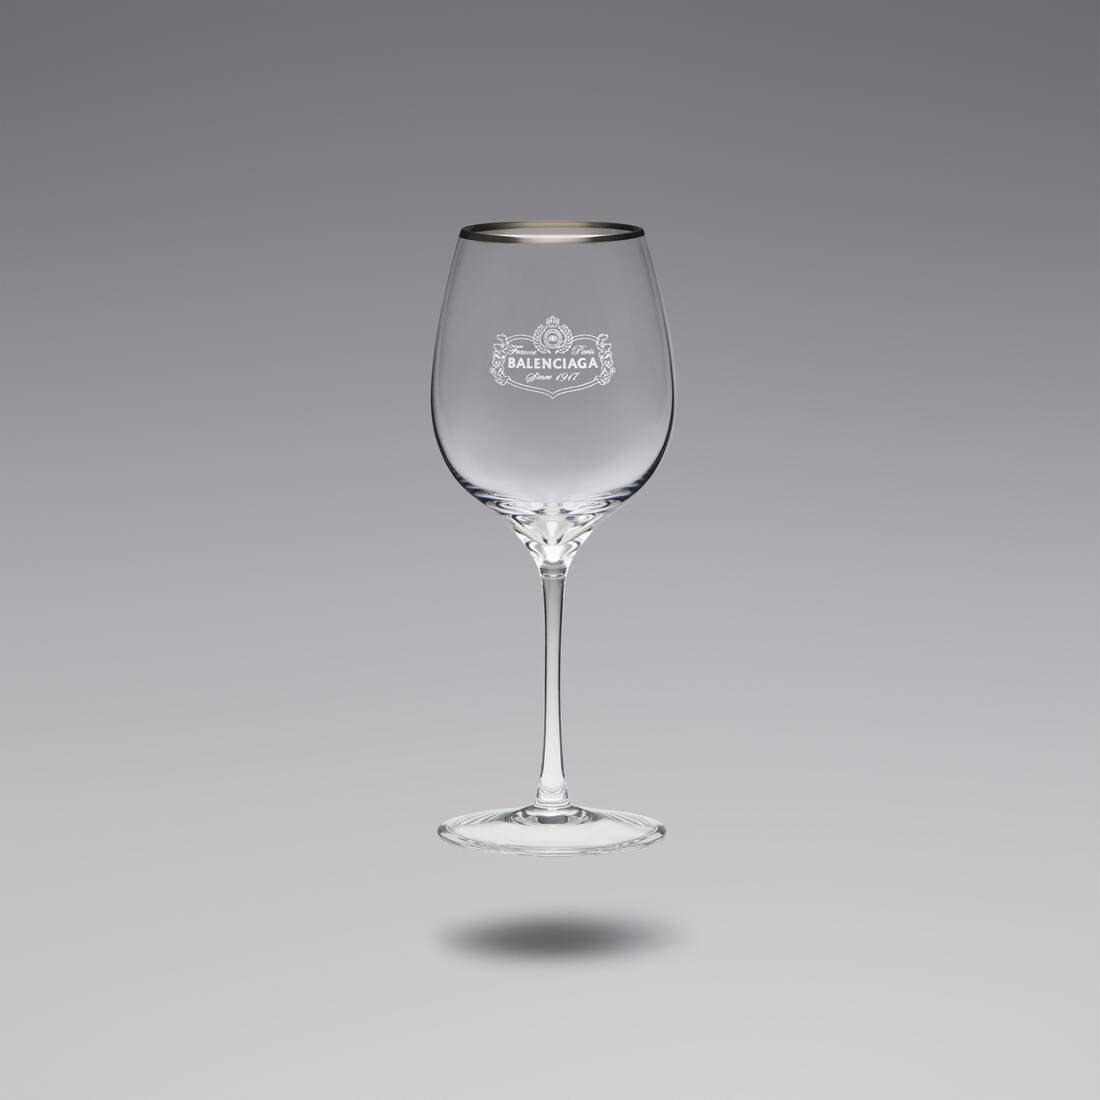 2 Small Monogrammed Wine Glasses  Wollersheim Winery, Distillery & Bistro